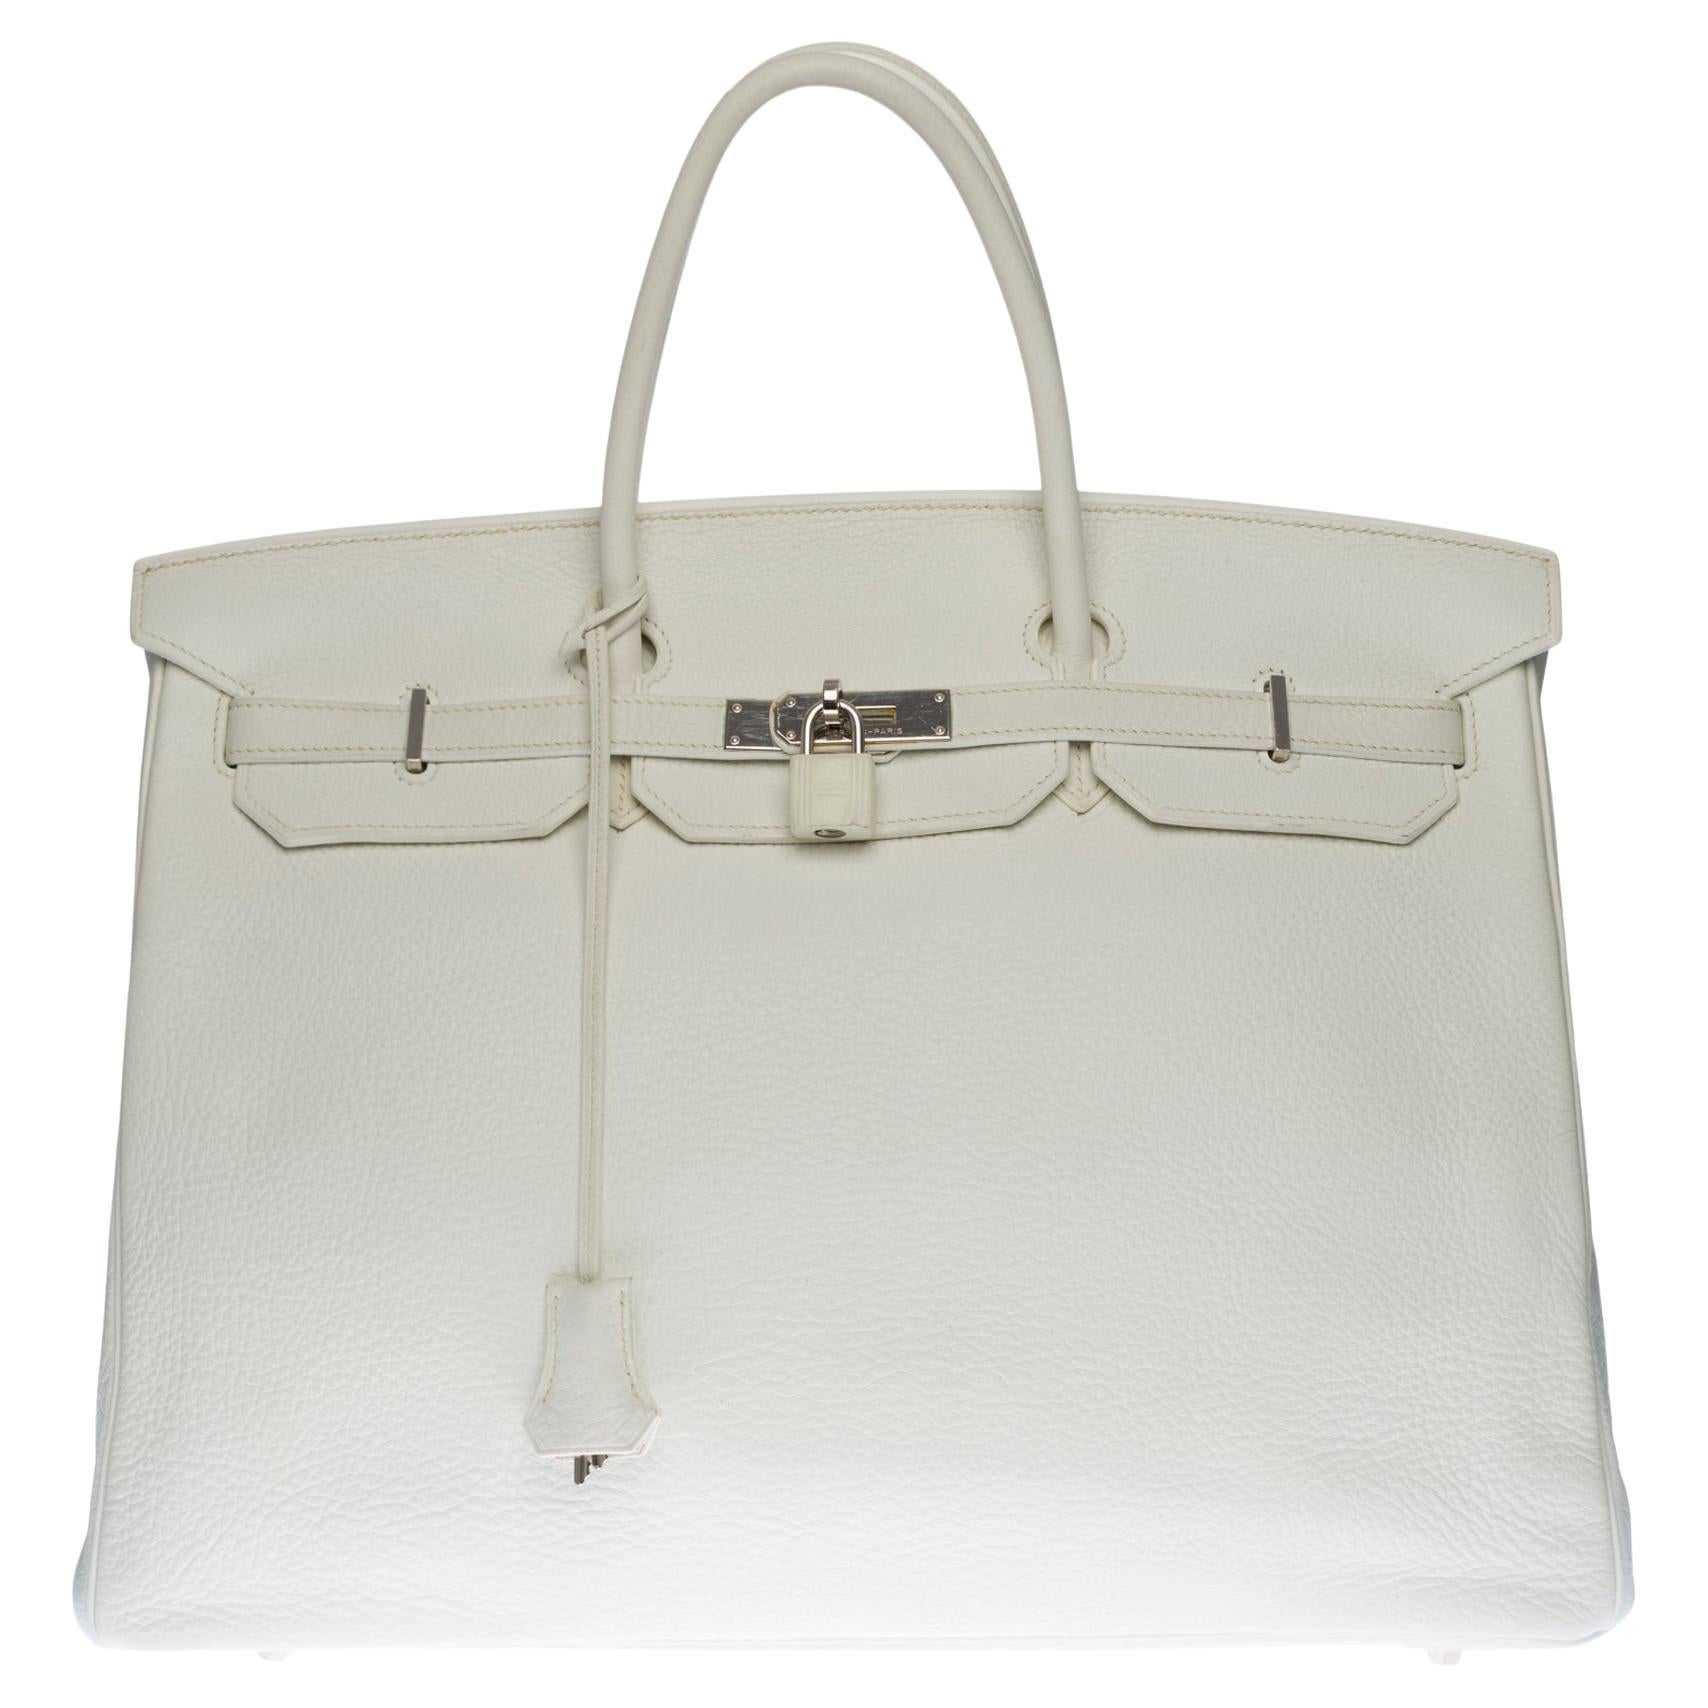 Stunning Hermes Birkin 40cm handbag in White Togo leather, SHW